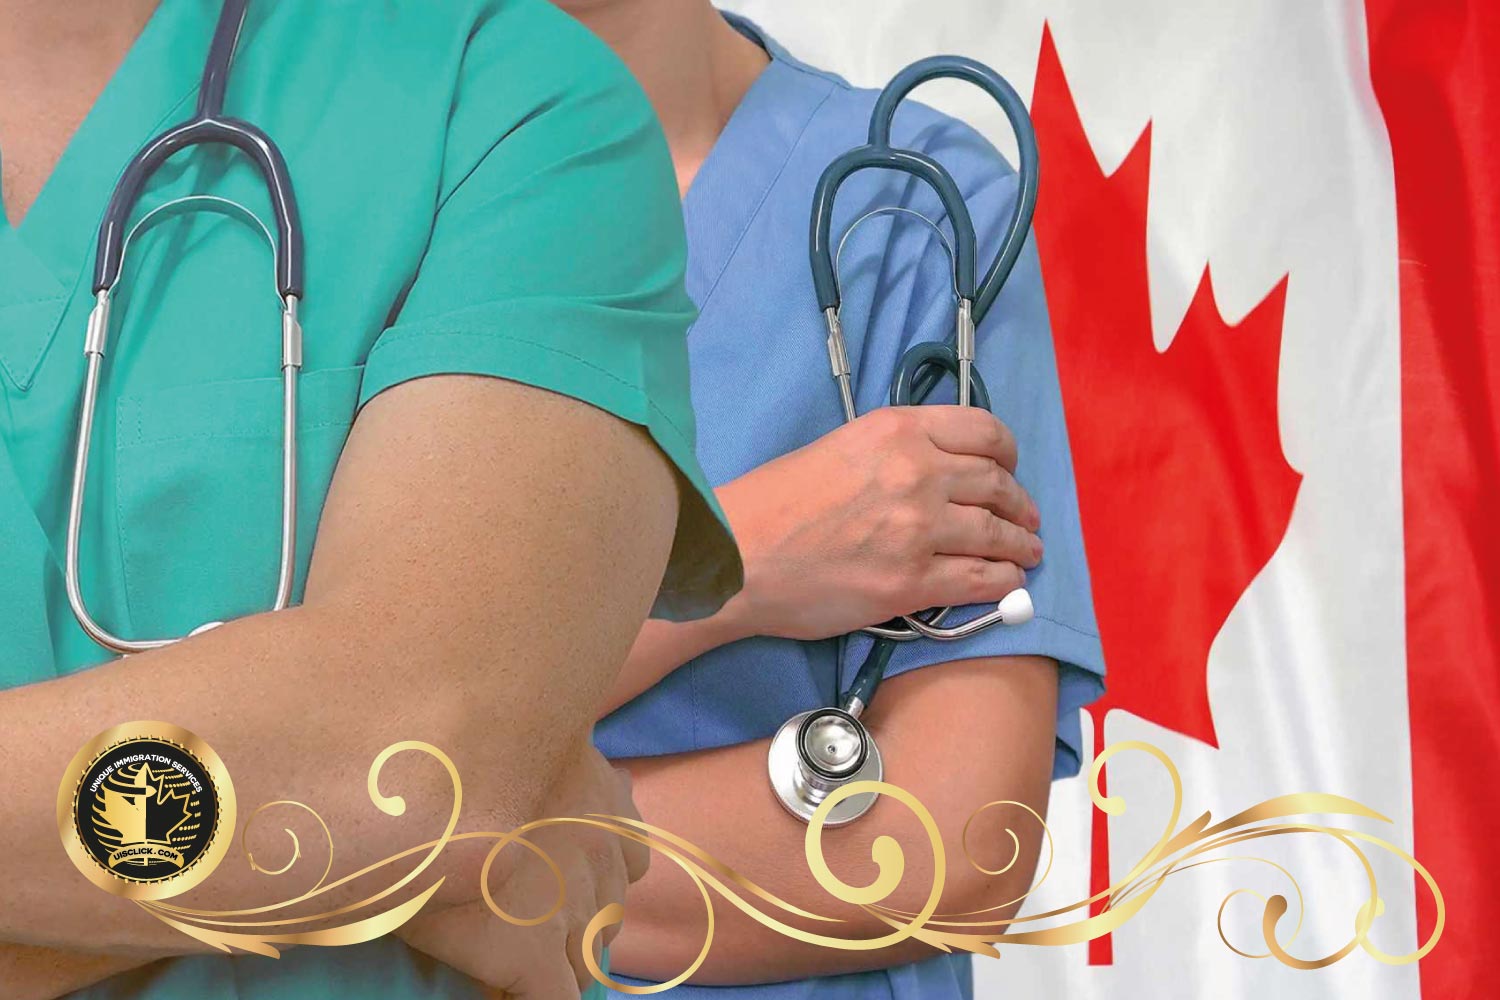 Obtaining accreditation as a nurse with international education in Canada